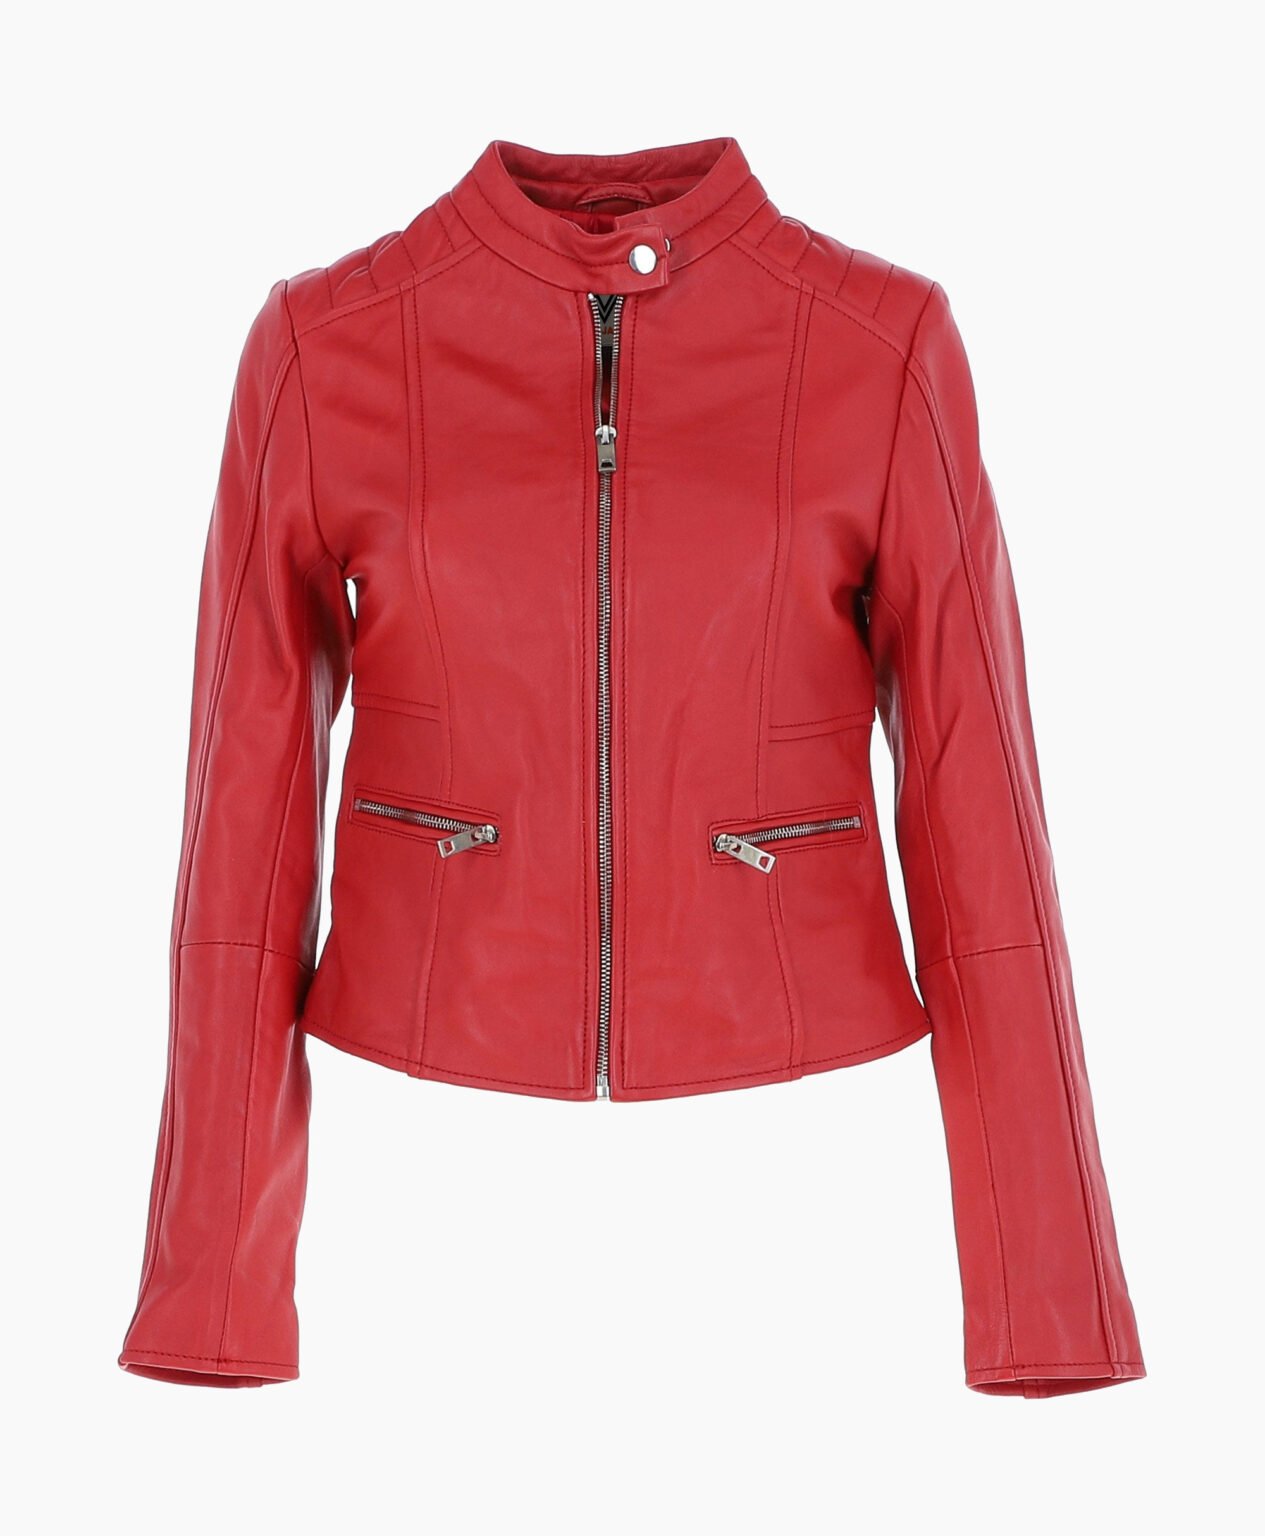 vogue-jacket-leather-biker-jacket-red-ontario-image200